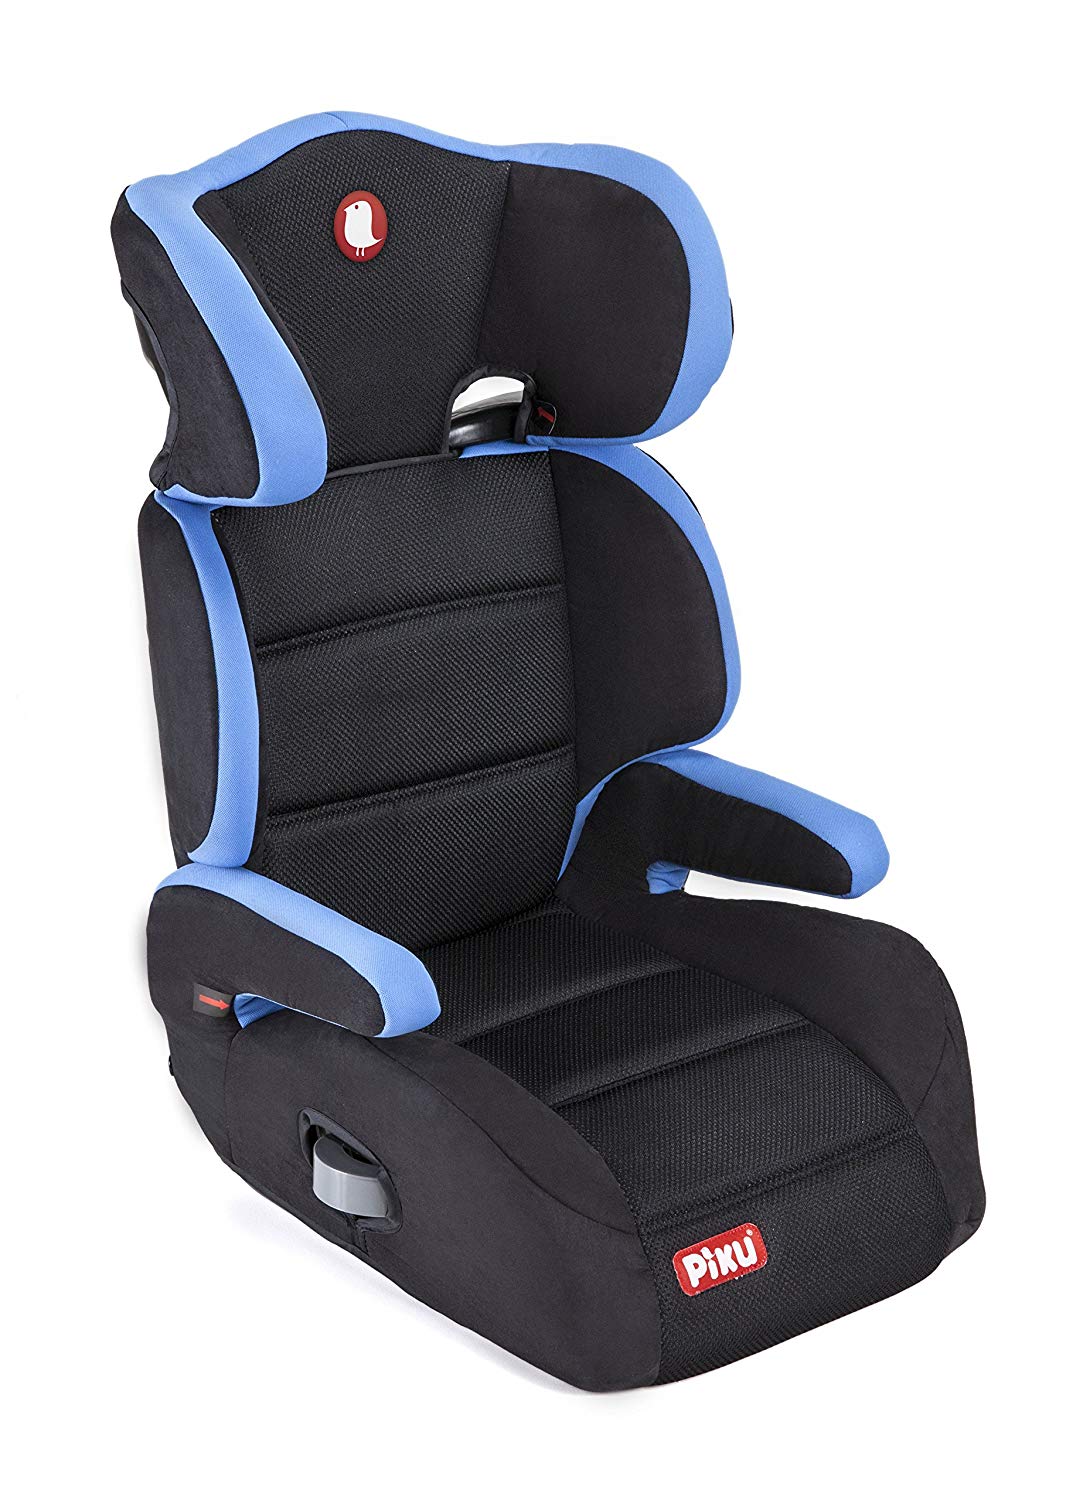 Black | Blue Honest 6227 Years / Car Forwarder Group Seat 15-36 2/3 Piku kg 3-12